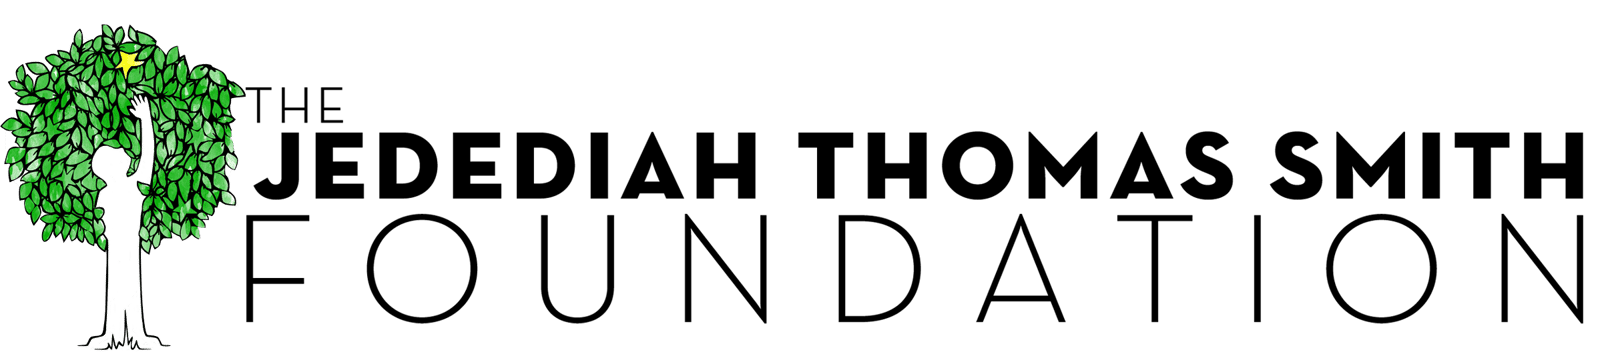 The Jedediah Thomas Smith Foundation